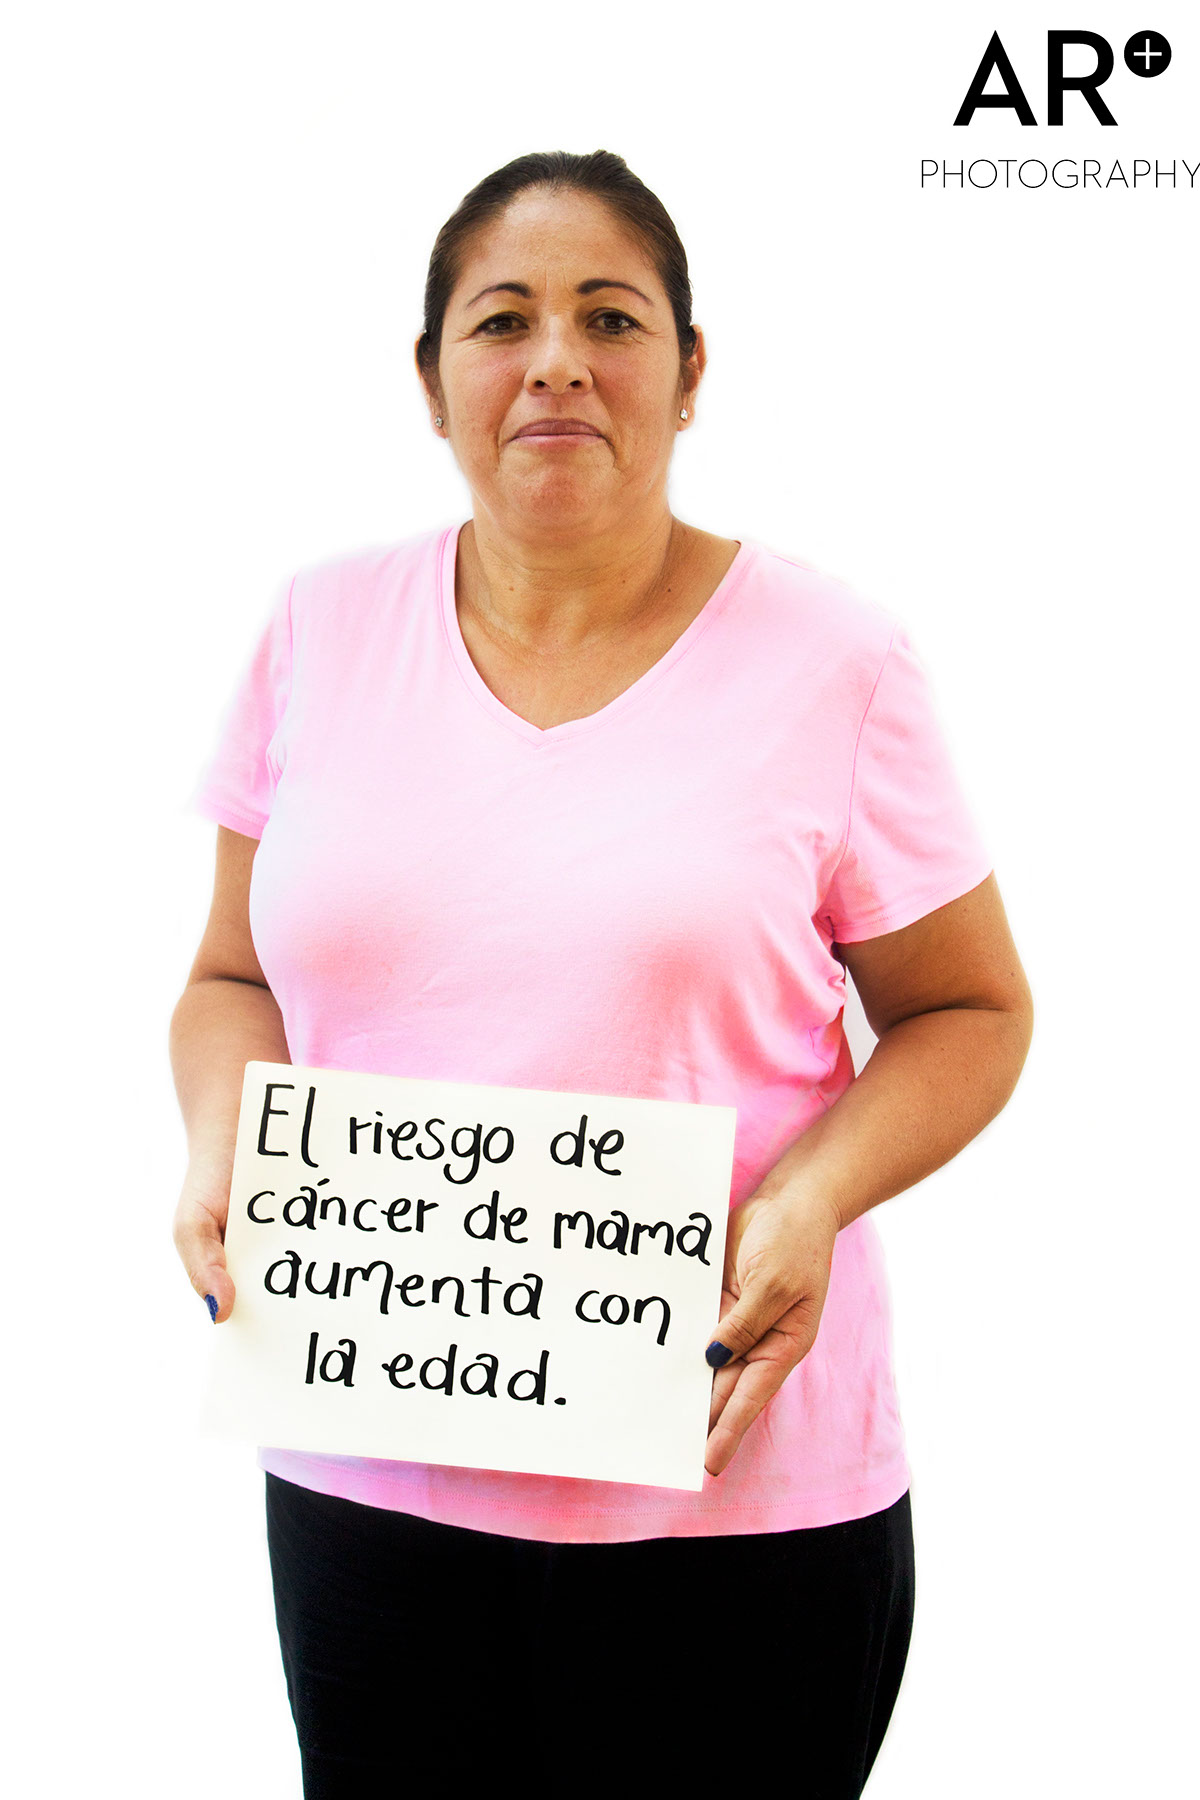 breastcancer cancerdemama cancer amor mujer hombre salud cuidate quierete tocate autoexplorate selfexam